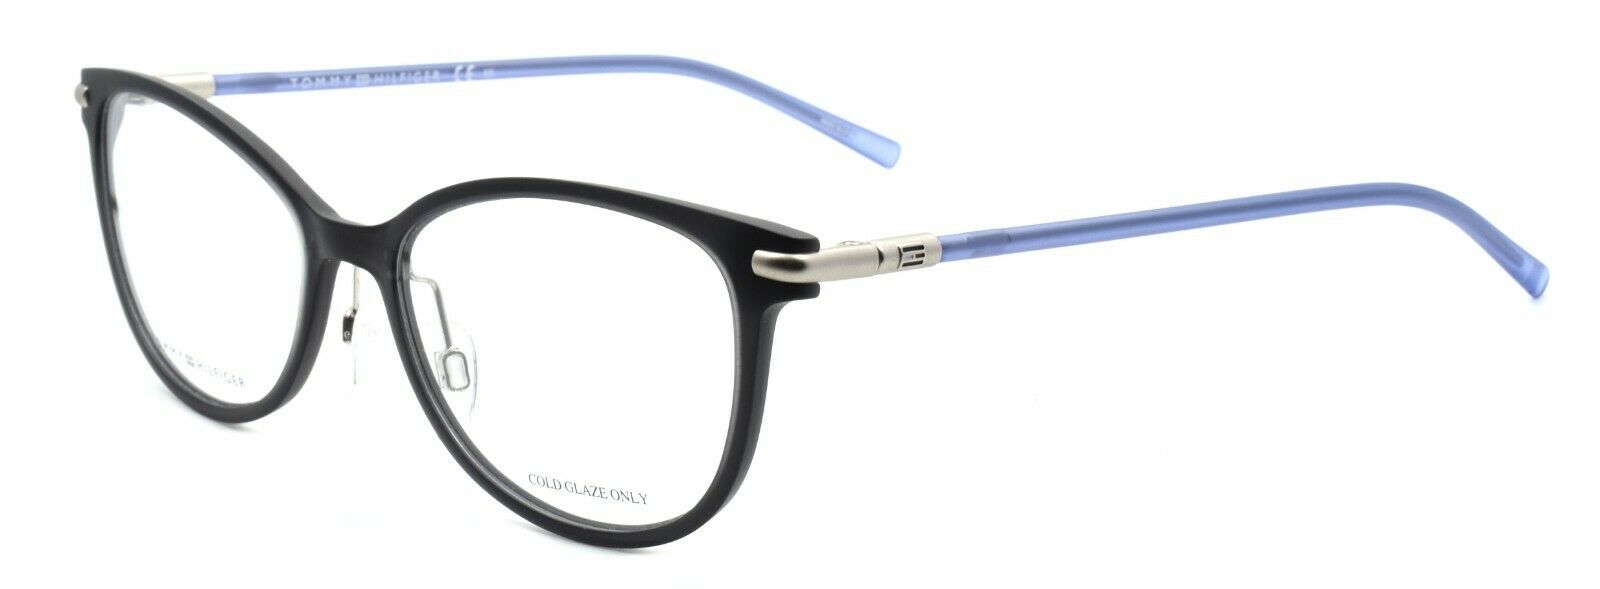 1-TOMMY HILFIGER TH 1398 R3B Women's Eyeglasses Frames 52-17-140 Gray / Blue +CASE-827886446322-IKSpecs